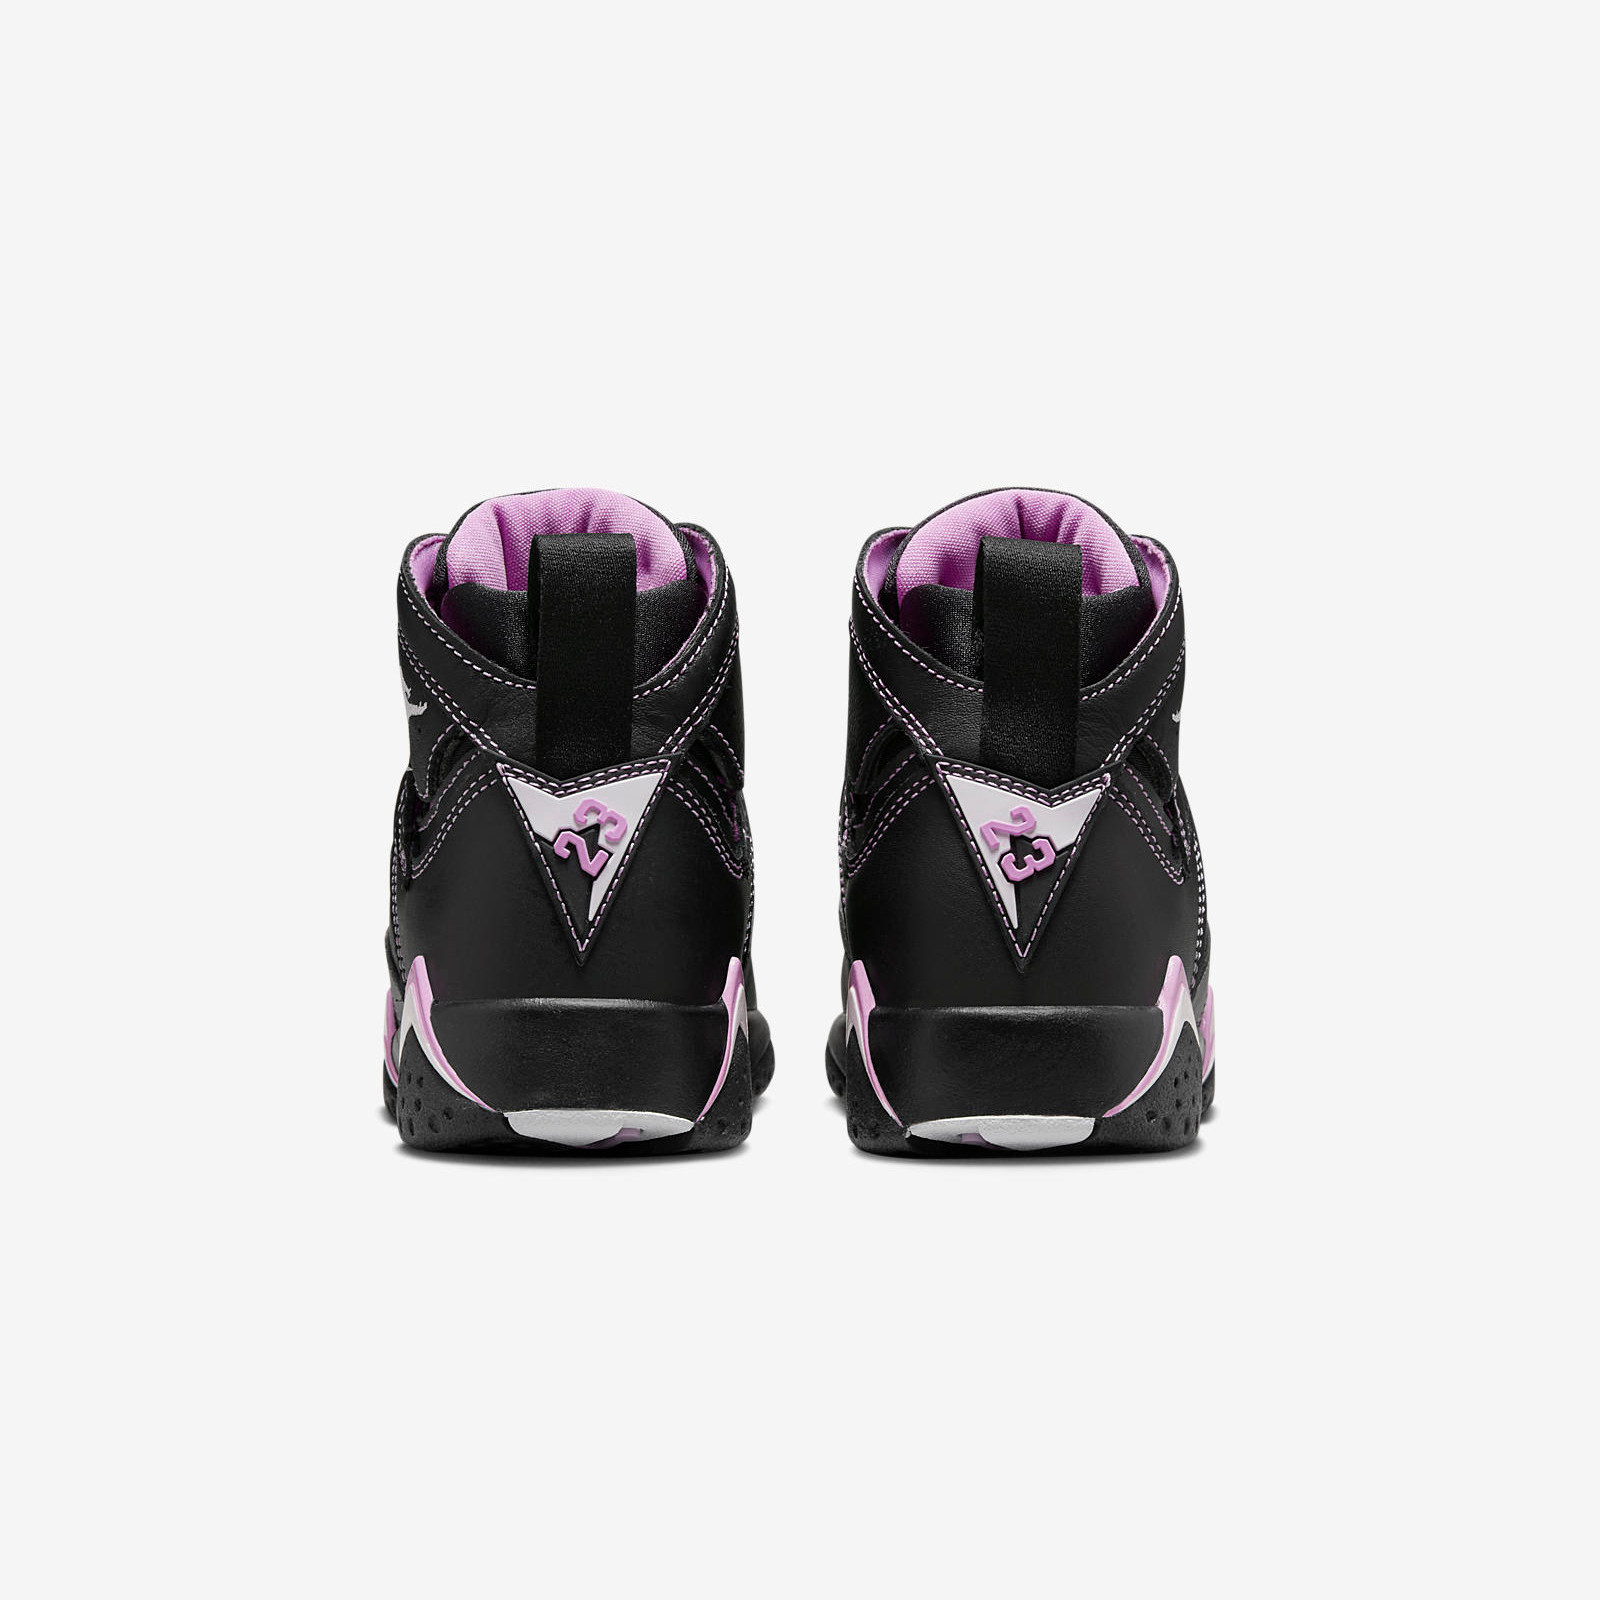 Air Jordan 7 Retro
« Barely Grape »